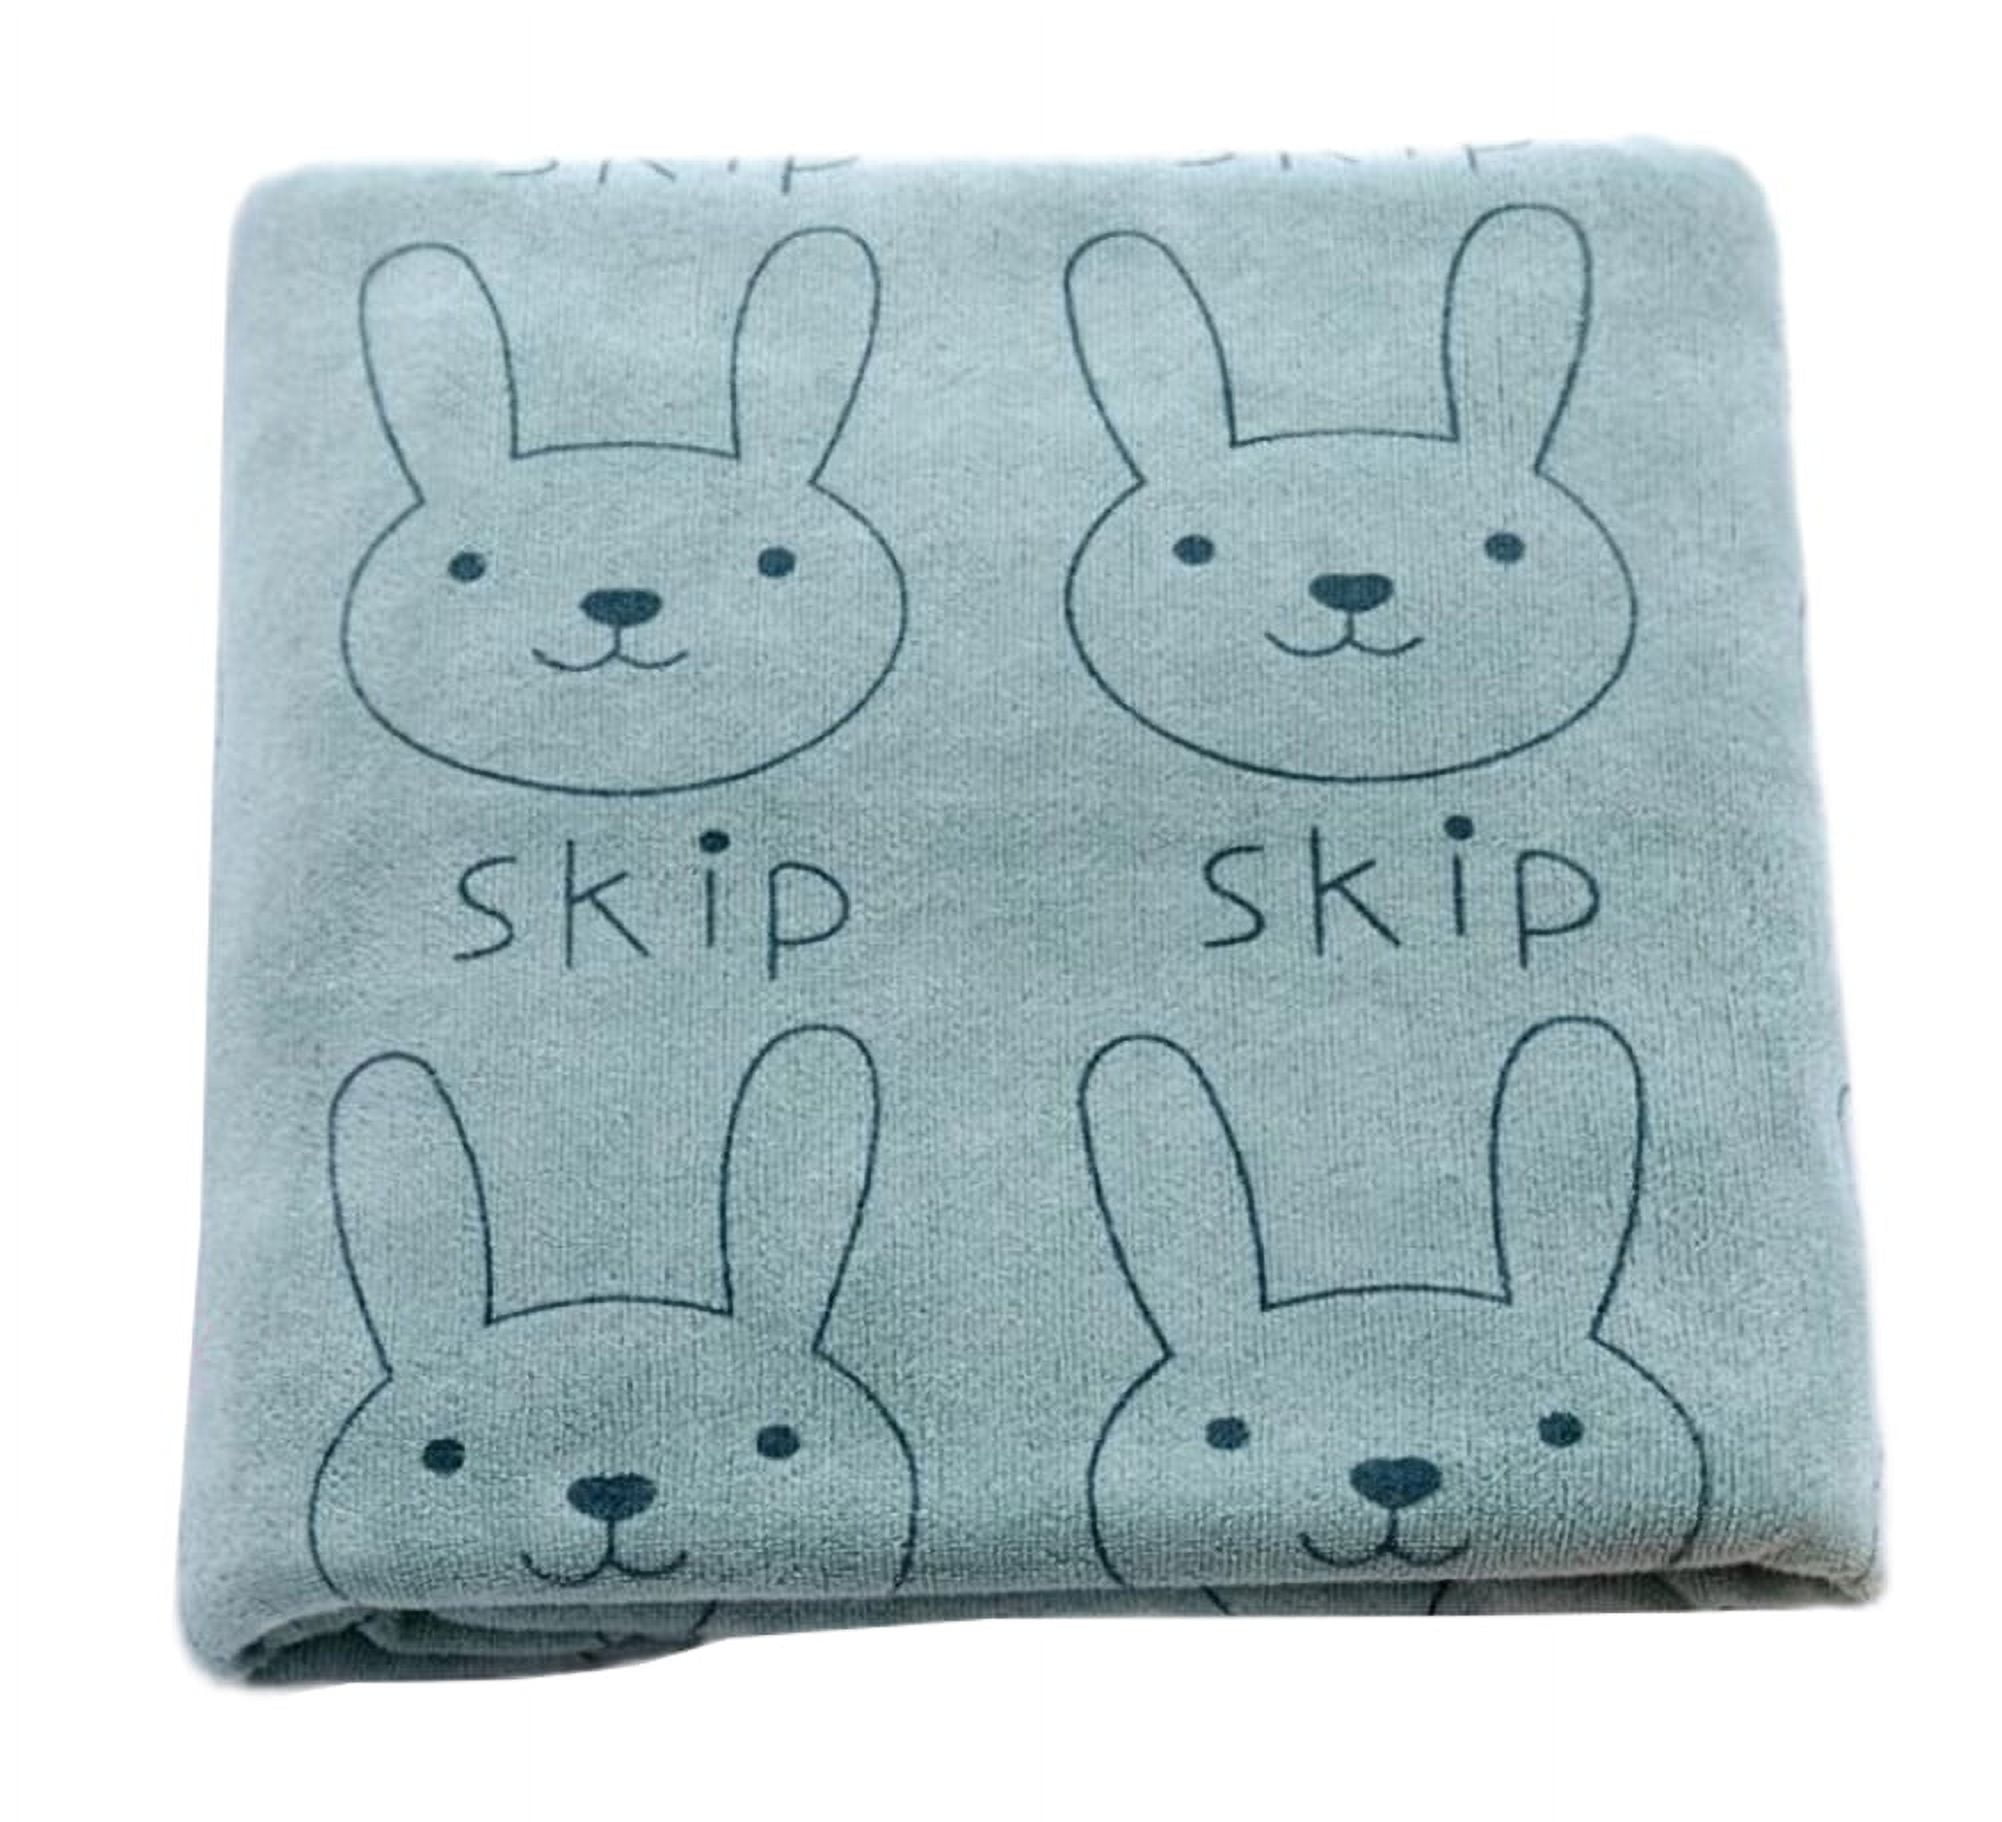 Bunny Bath Hand Towels, Set of 2, Blue White Buffalo Plaid Appliqued Rabbit